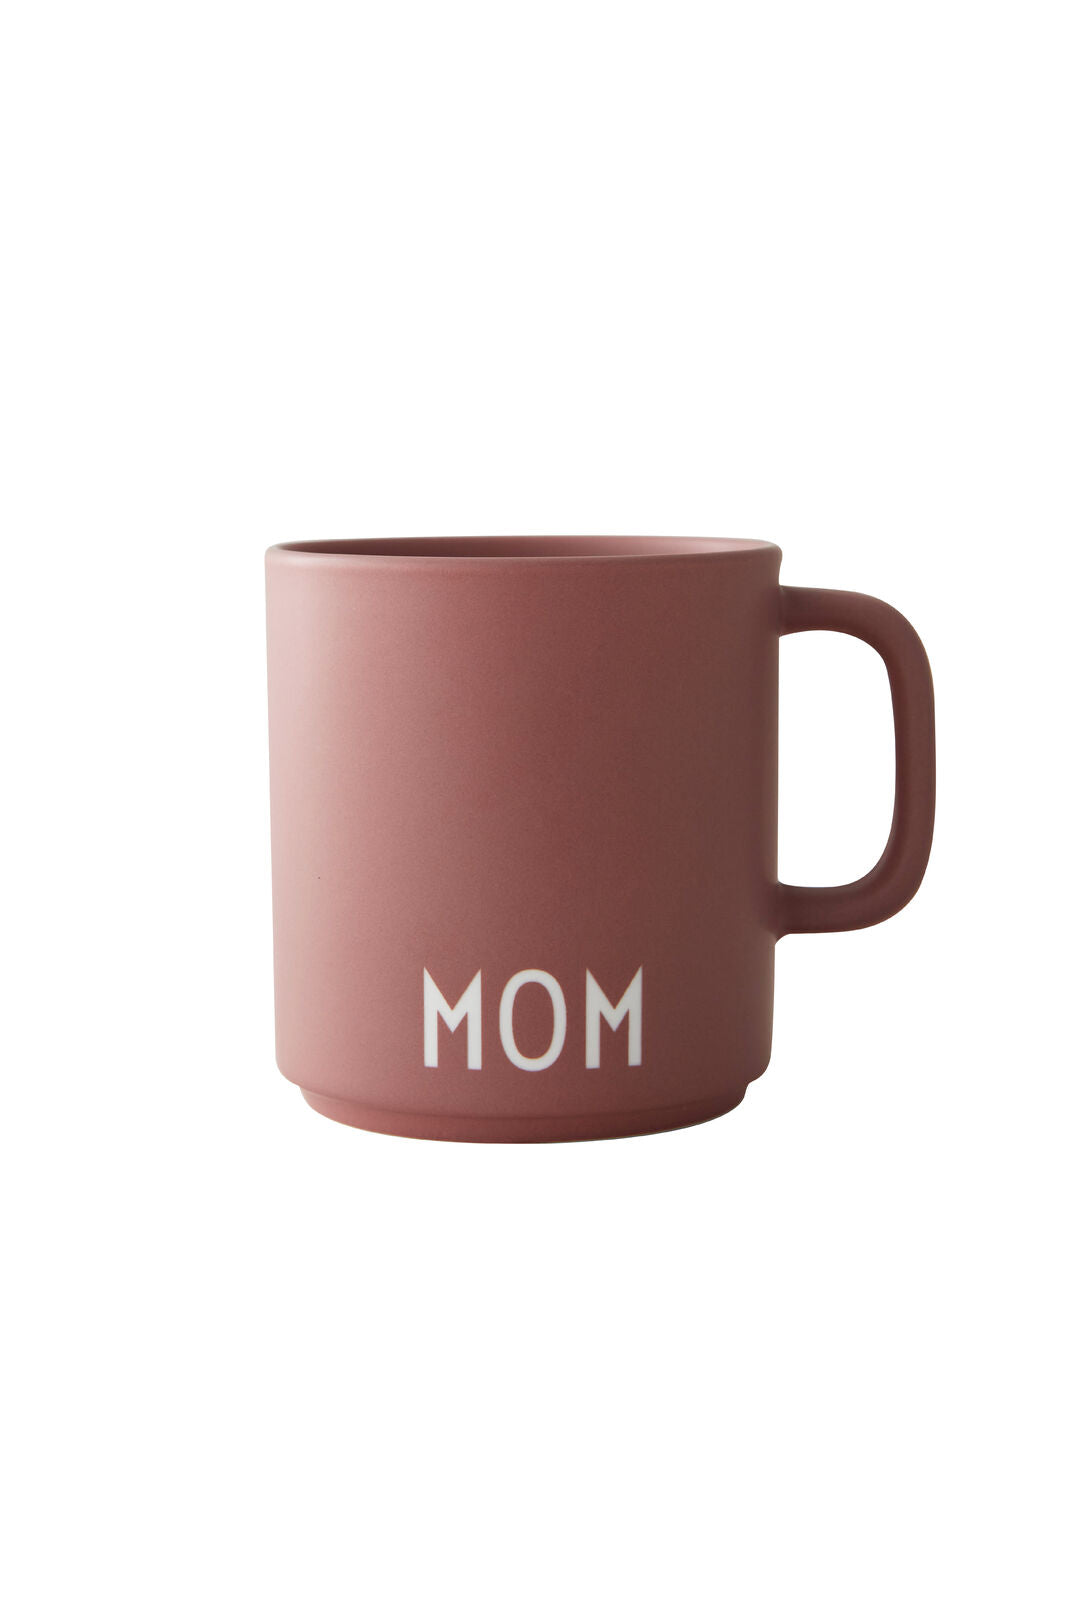 CUP MOM ASH-ROSE